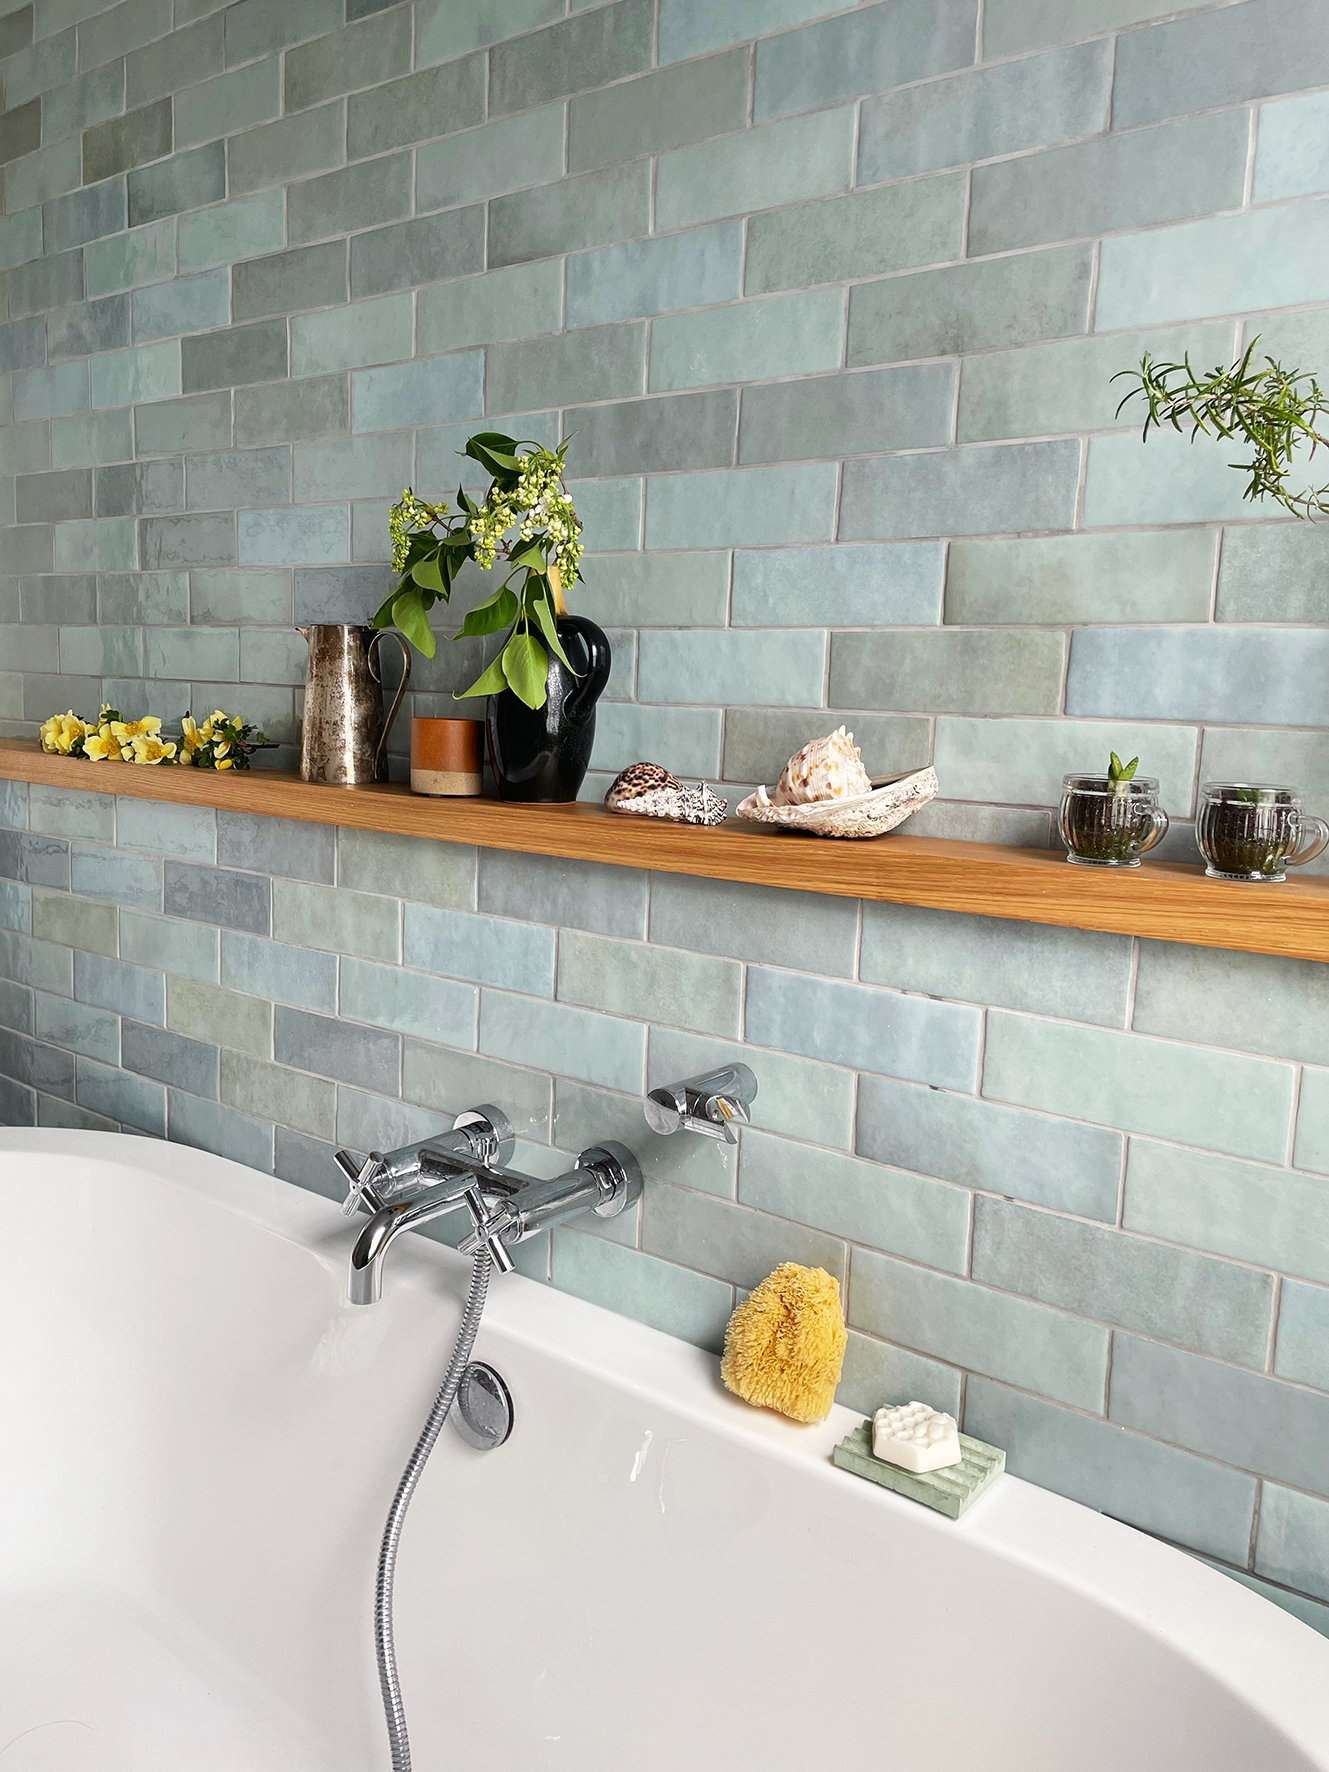 CharlotteBucciero-Interiors-Bathroom-walltile-design-blue-oak-shelf.jpg